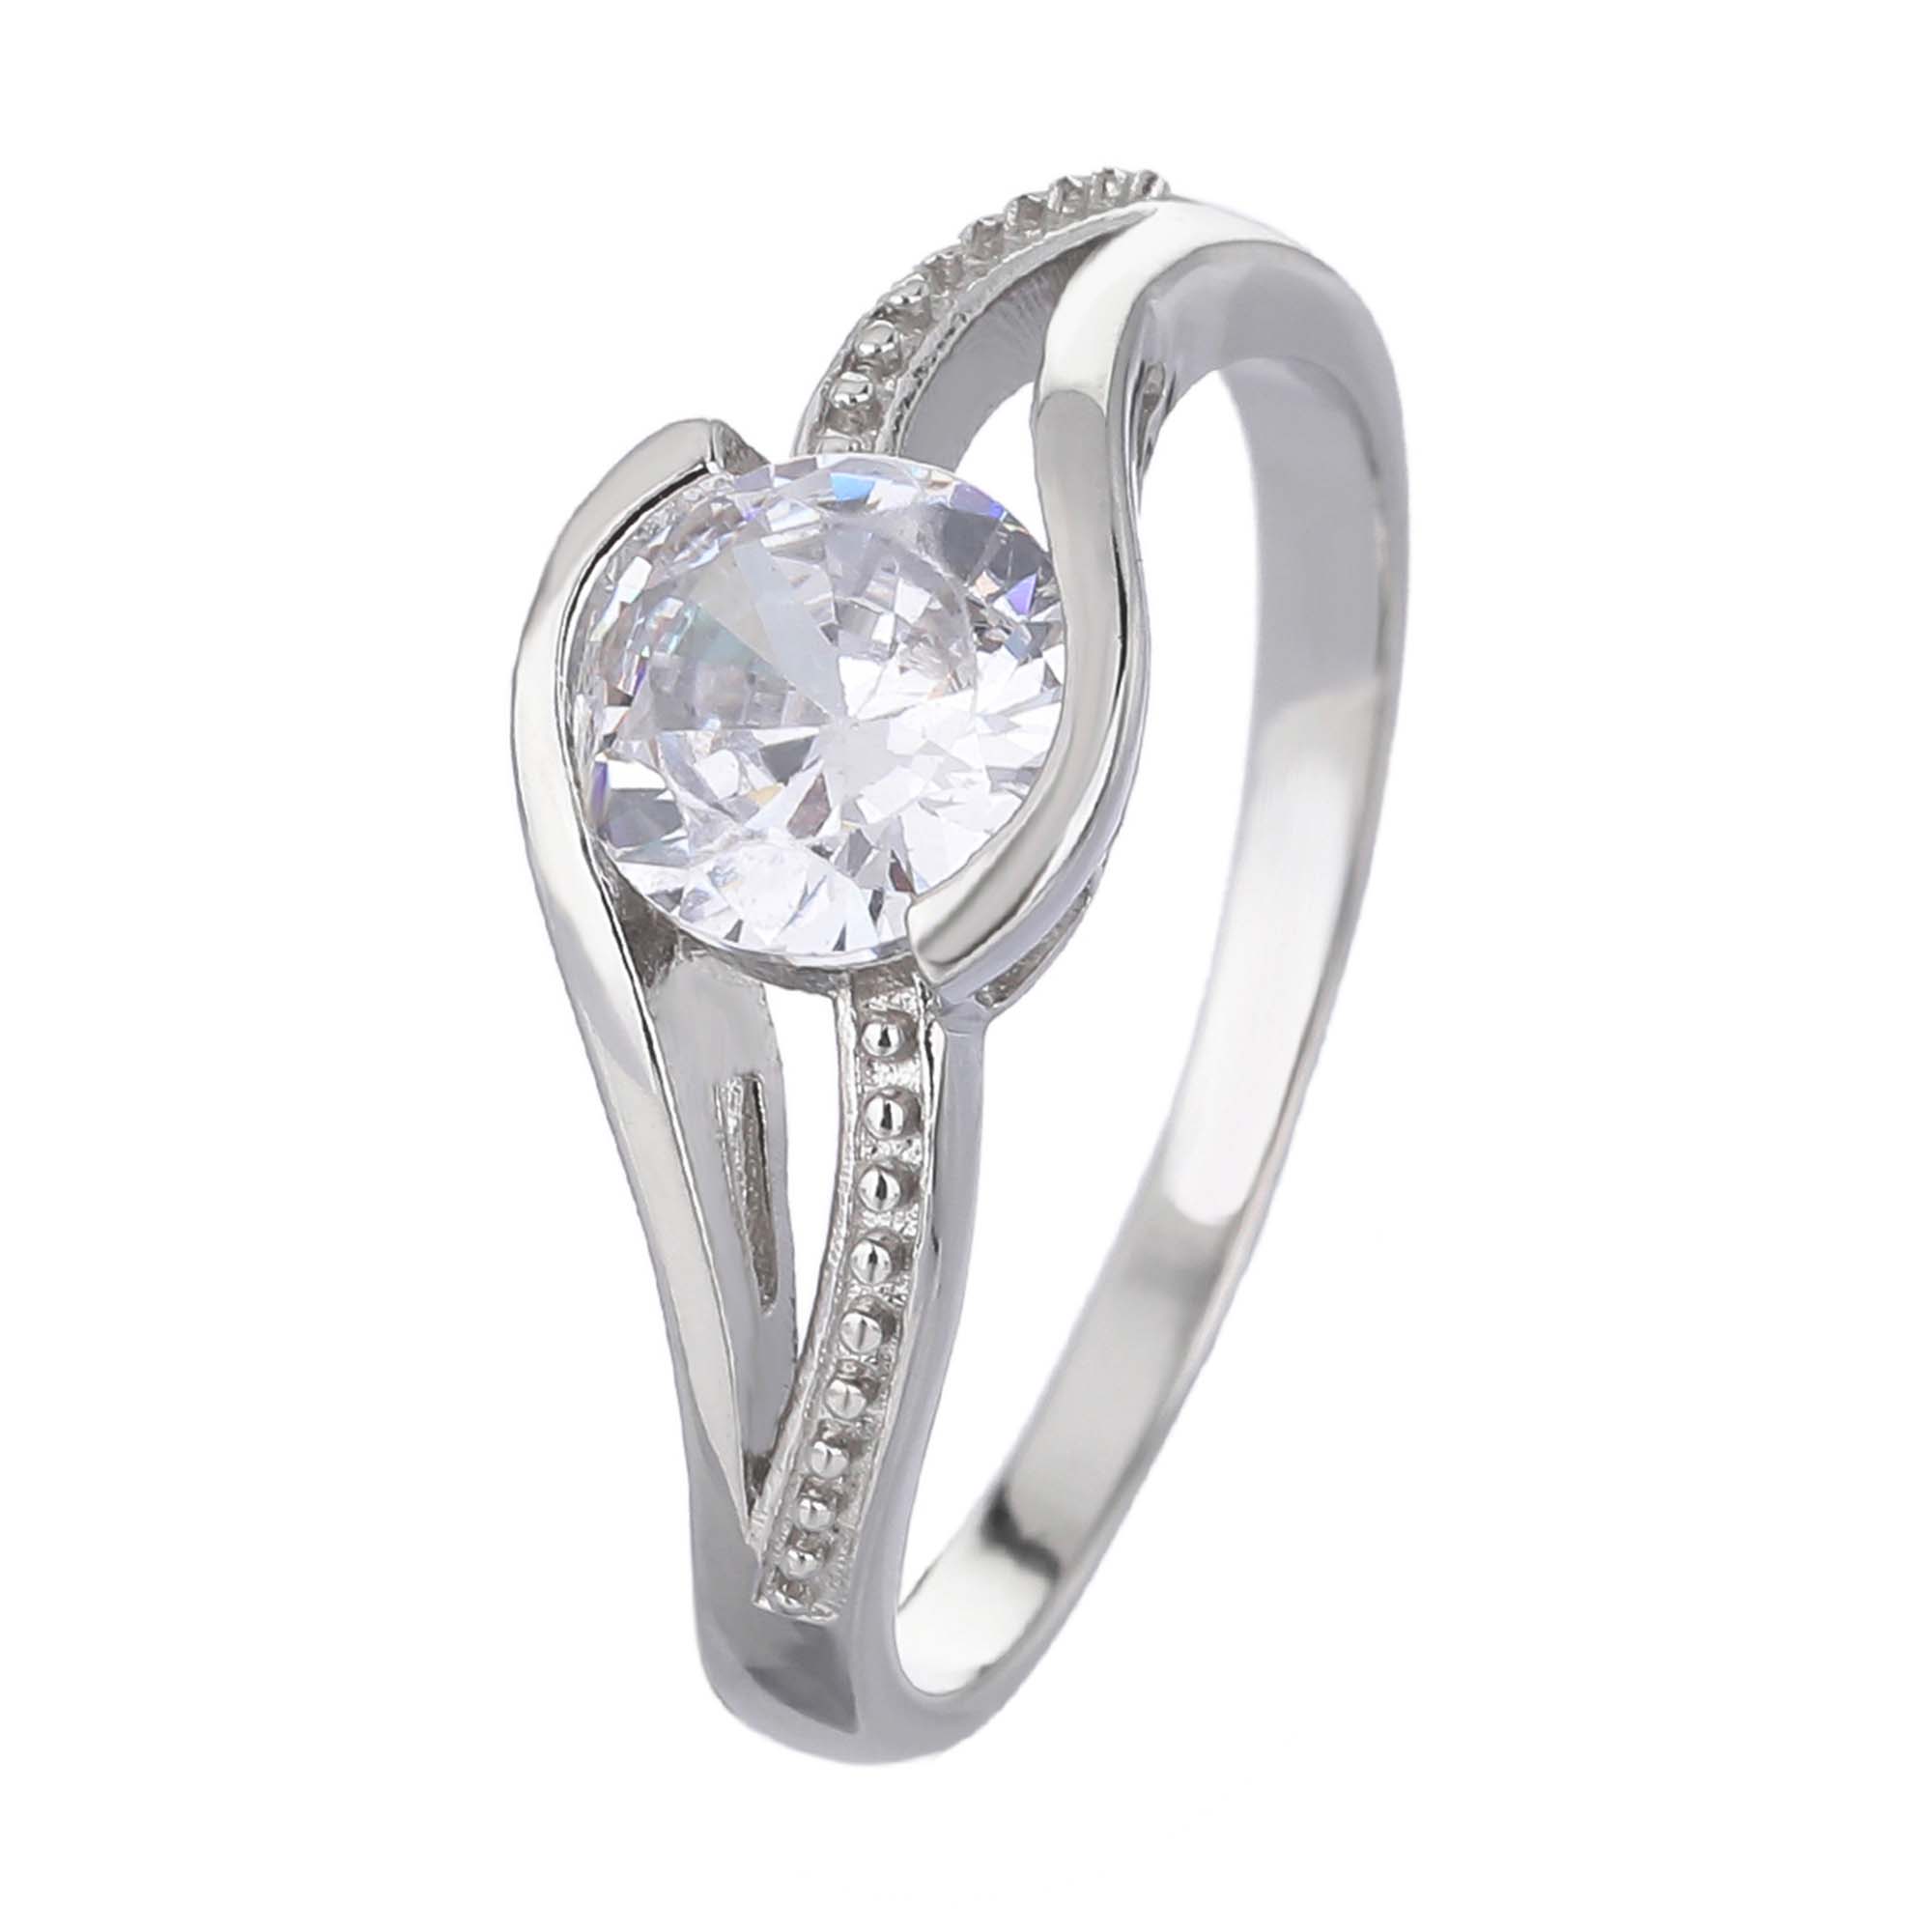 Stříbrný prsten SOLITÉR bílý VLNKY Velikost prstenu: 54 Ag 925/1000